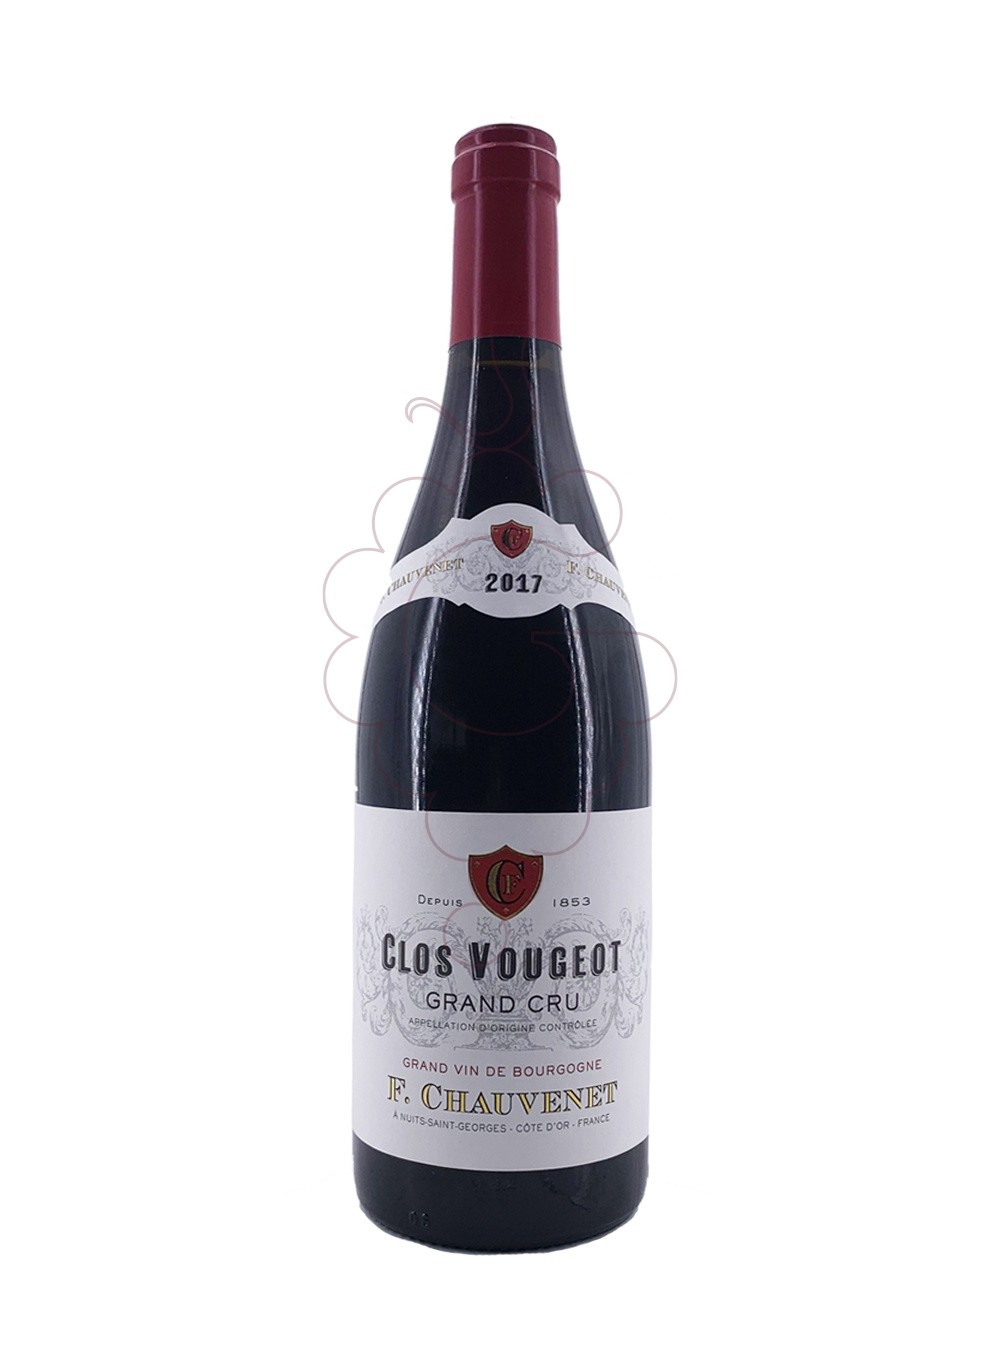 Photo F.Chauvenet Clos de Vougeot Grand Cru red wine